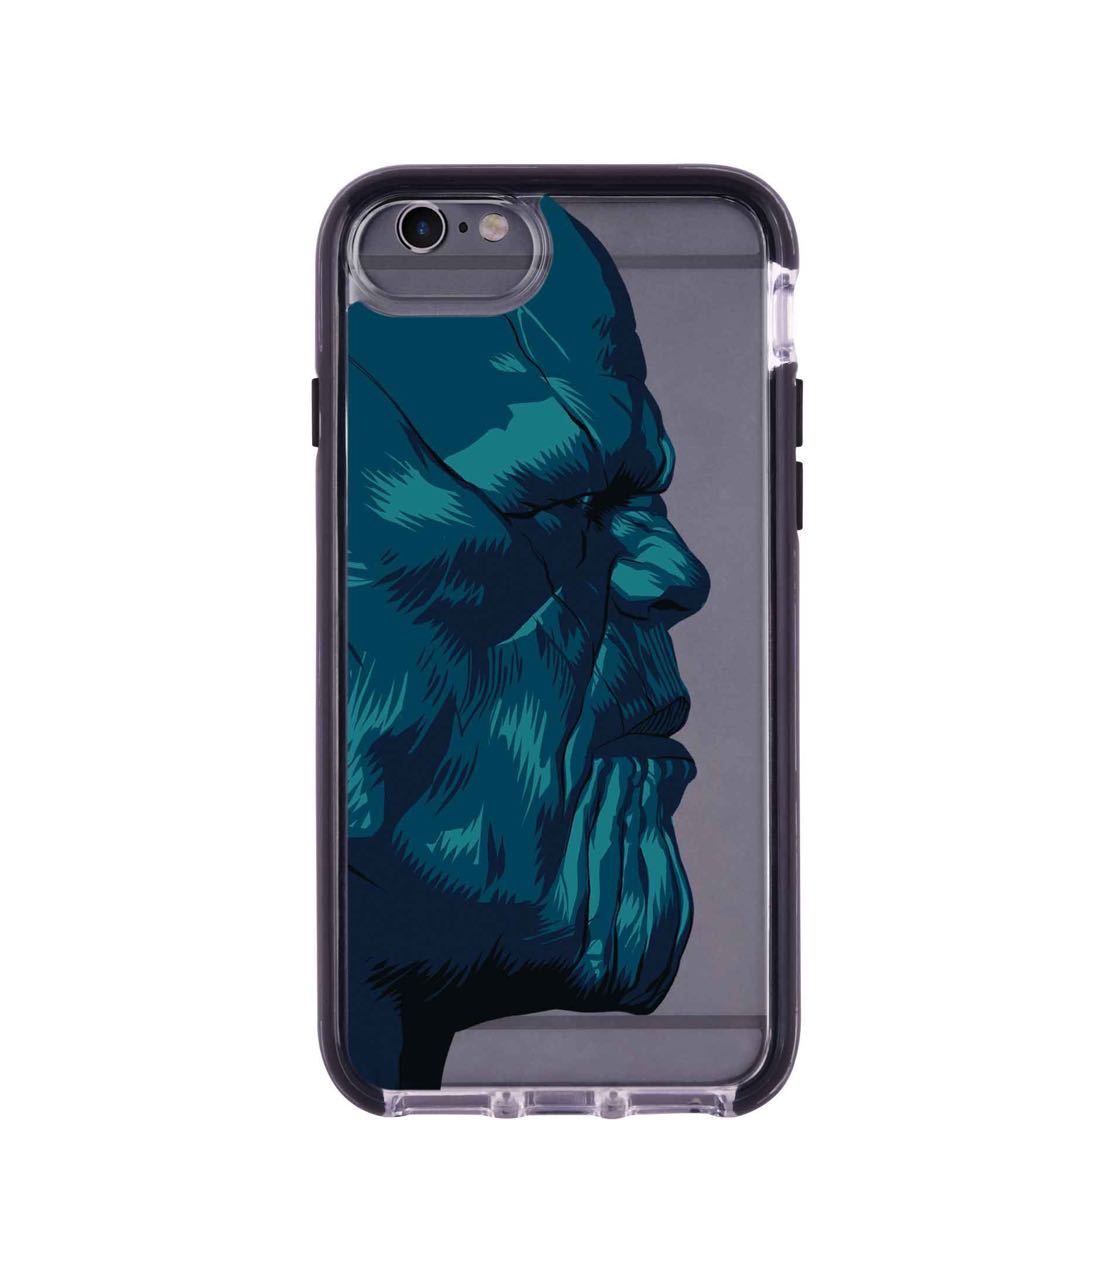 Illuminated Thanos - Extreme Phone Case for iPhone 6S Plus